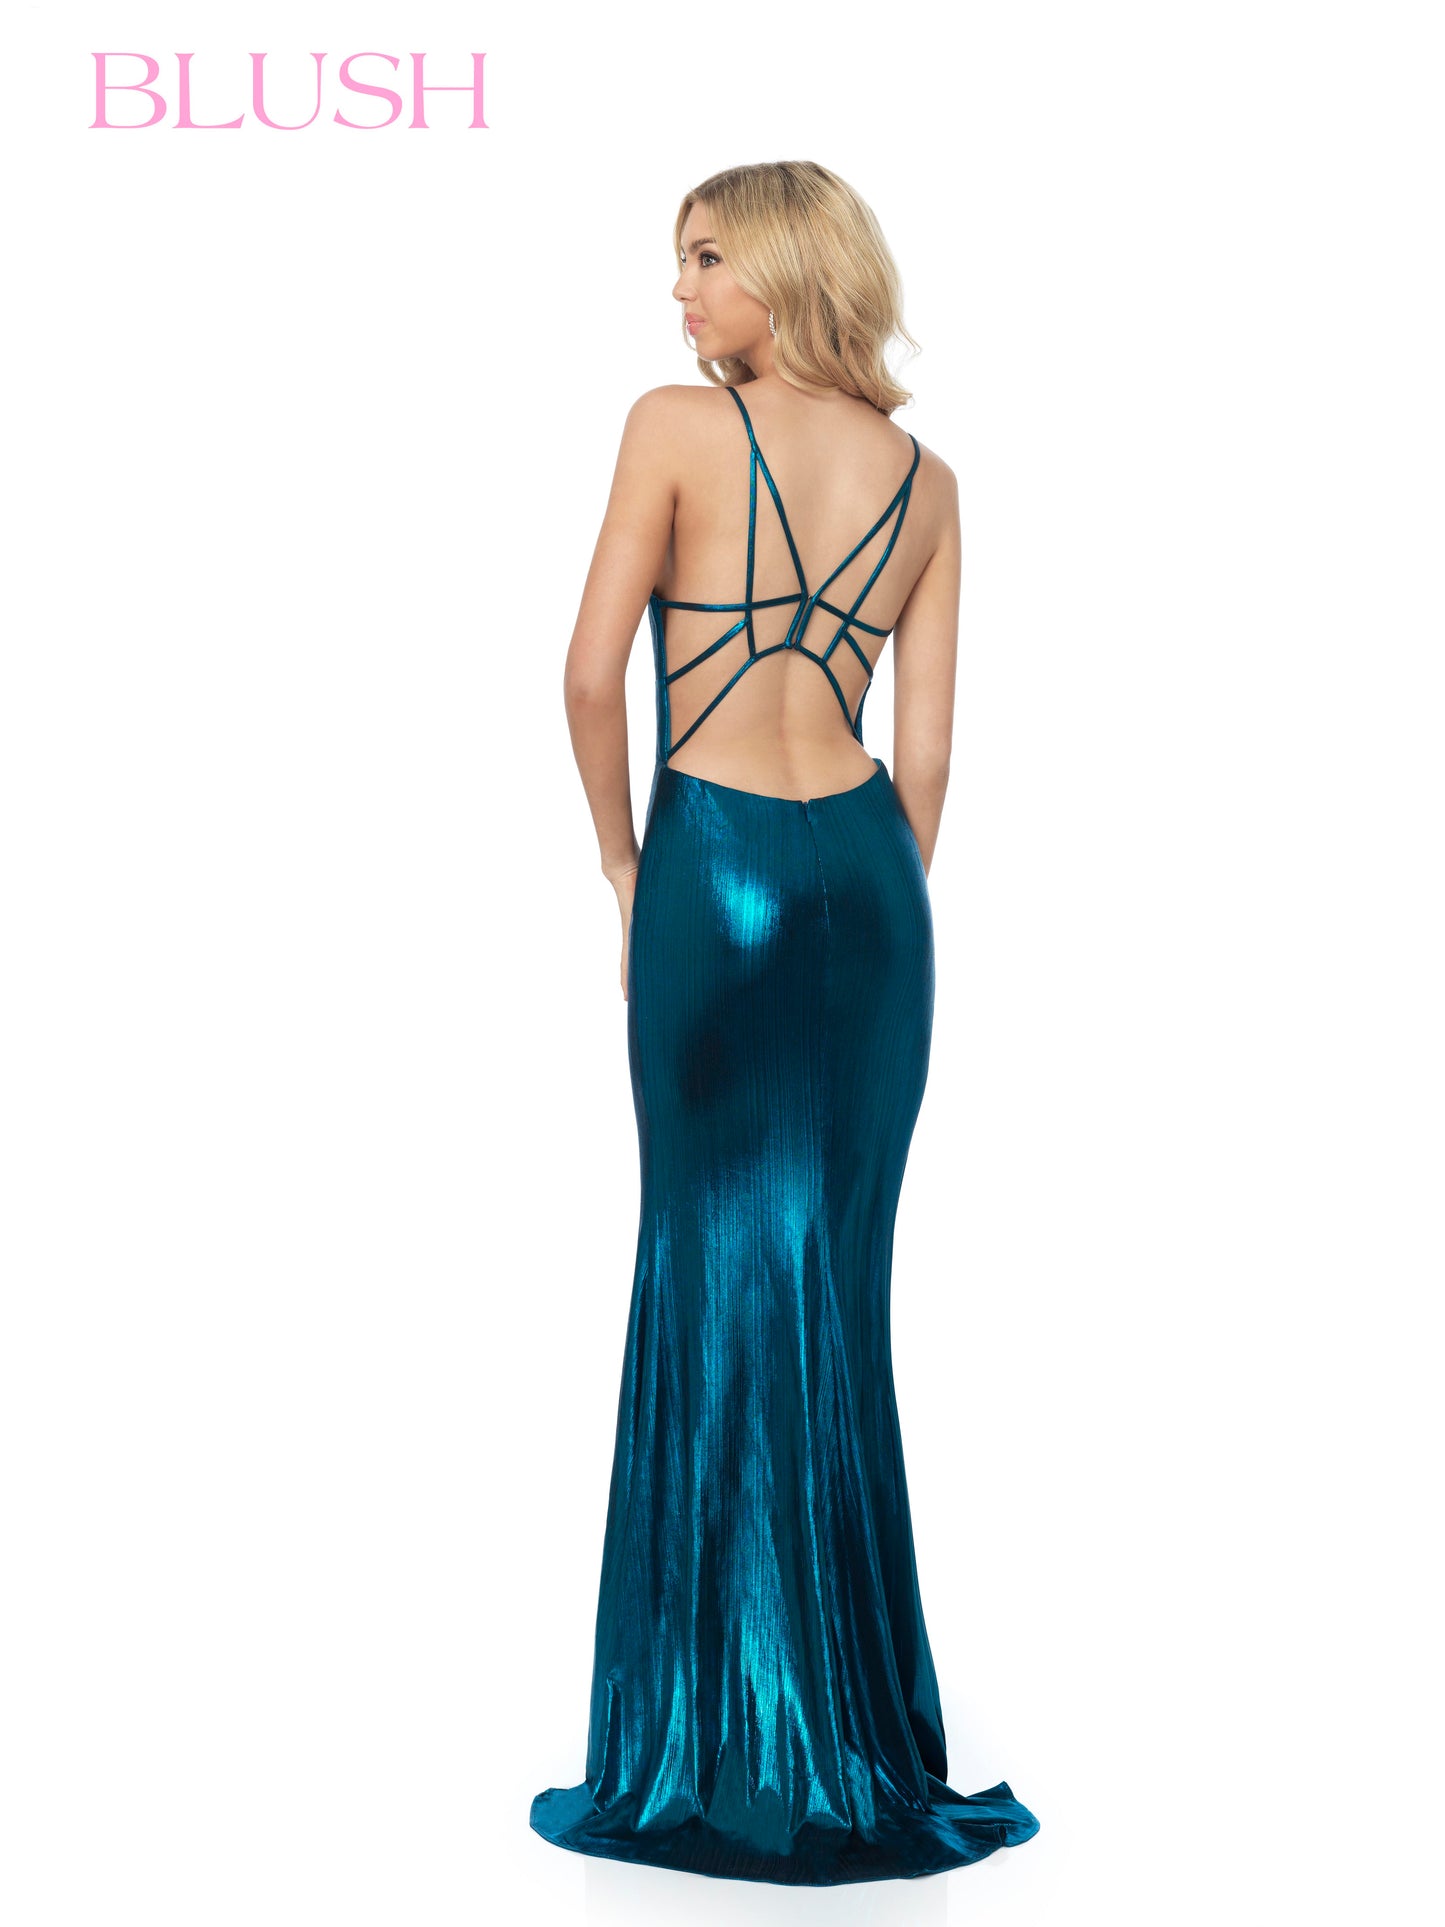 Blush Prom Dress 11884 Size 0 Magenta Metallic Shimmer Prom Dress